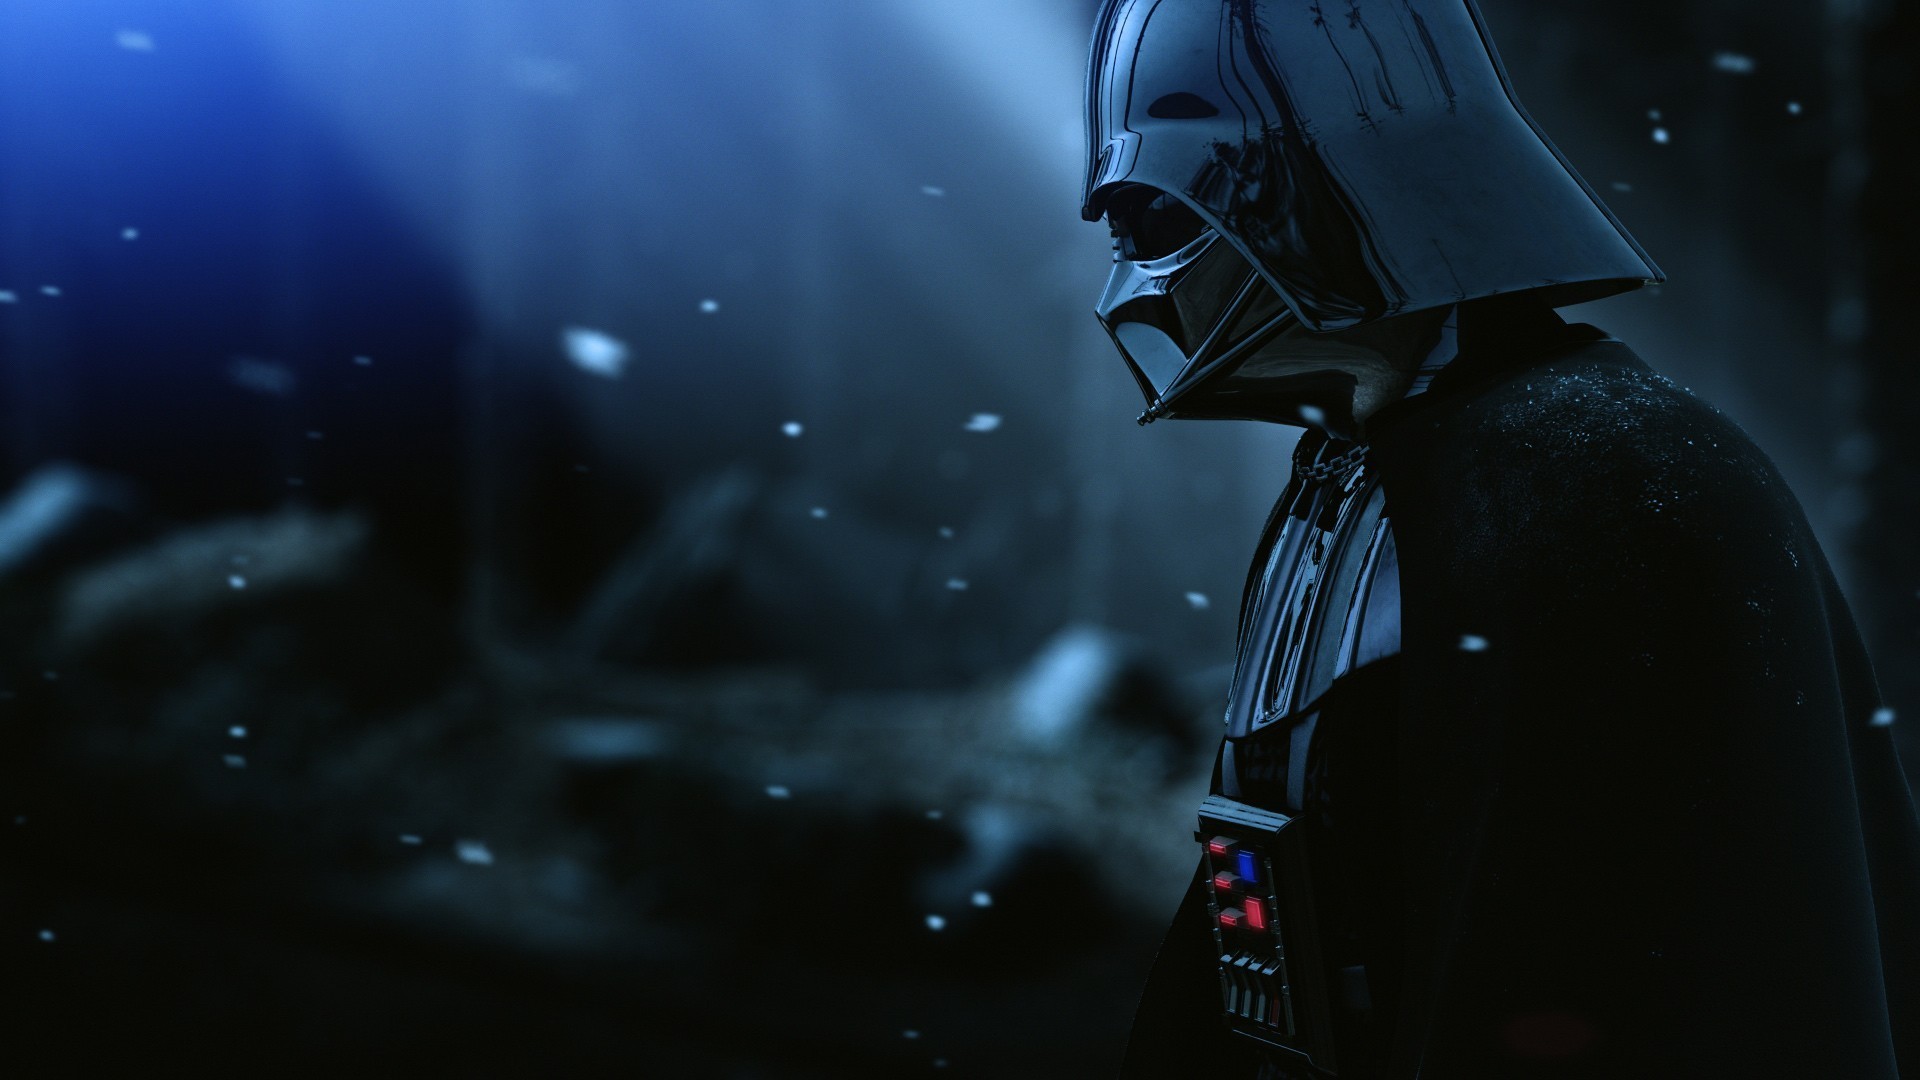 1920x1080 General  anime Darth Vader villain anime Jedi evil armor movies  Star Wars blurred digital art